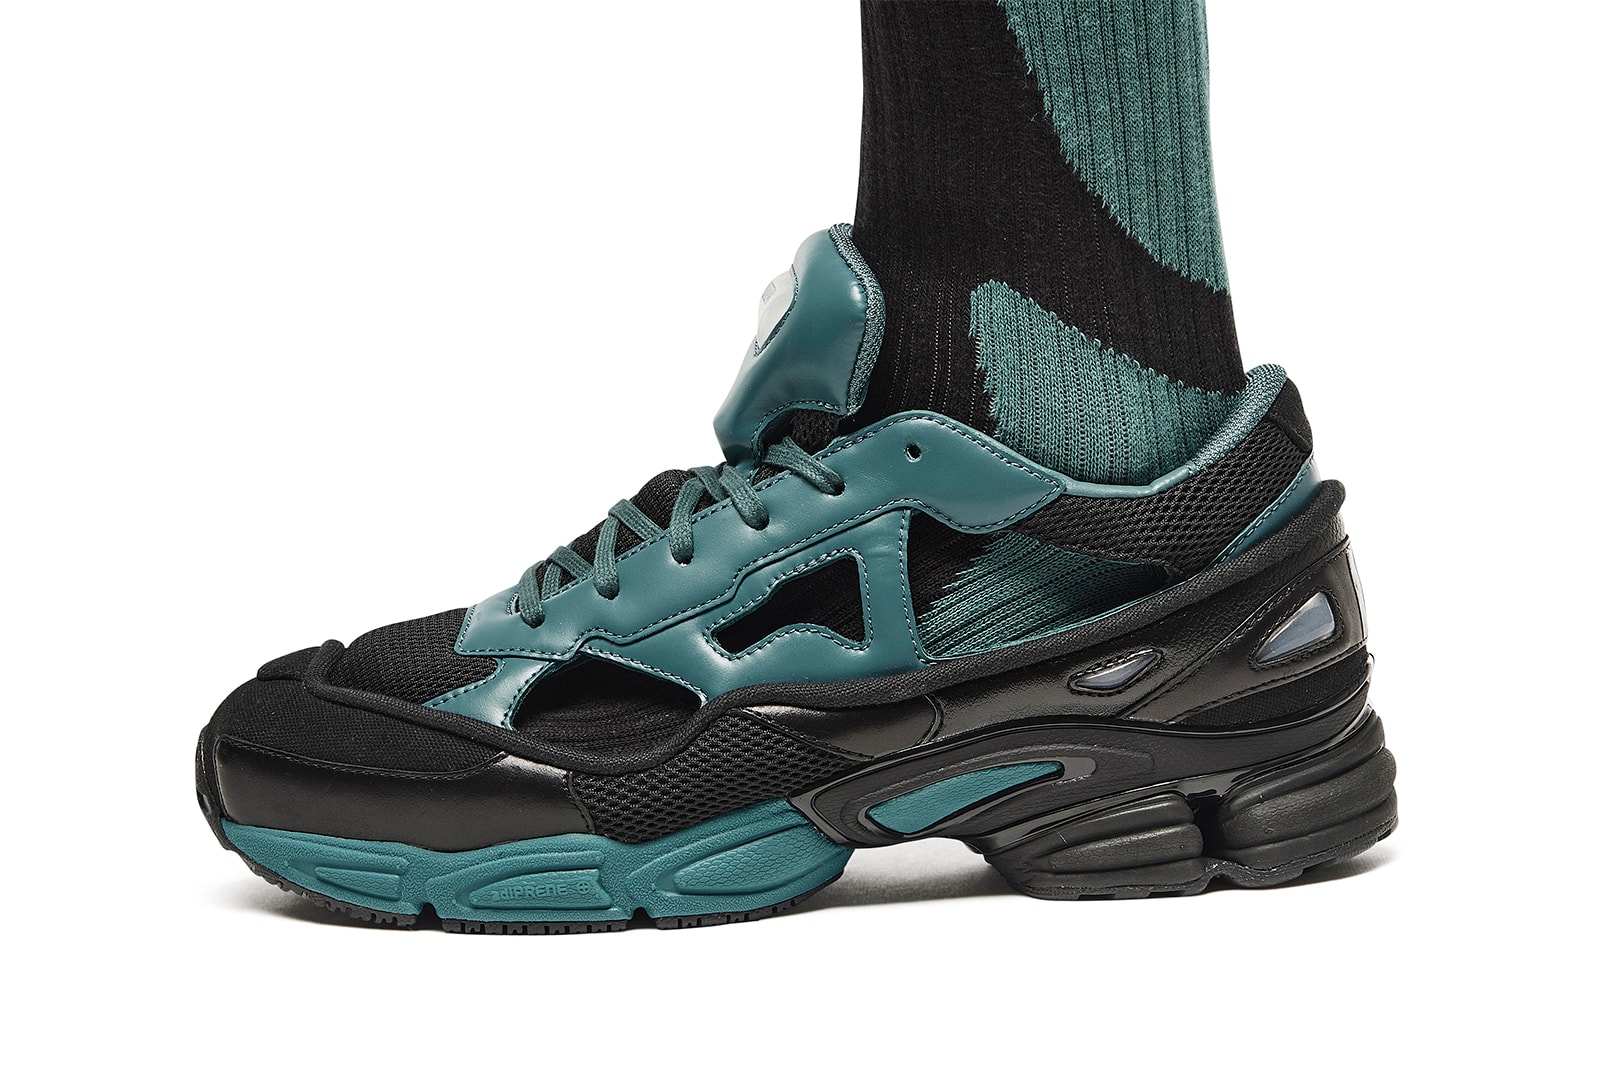 adidas Originals Raf Simons Replicant Ozweego Raffle HBX Colorways Chunky Sneakers Footwear Trainers